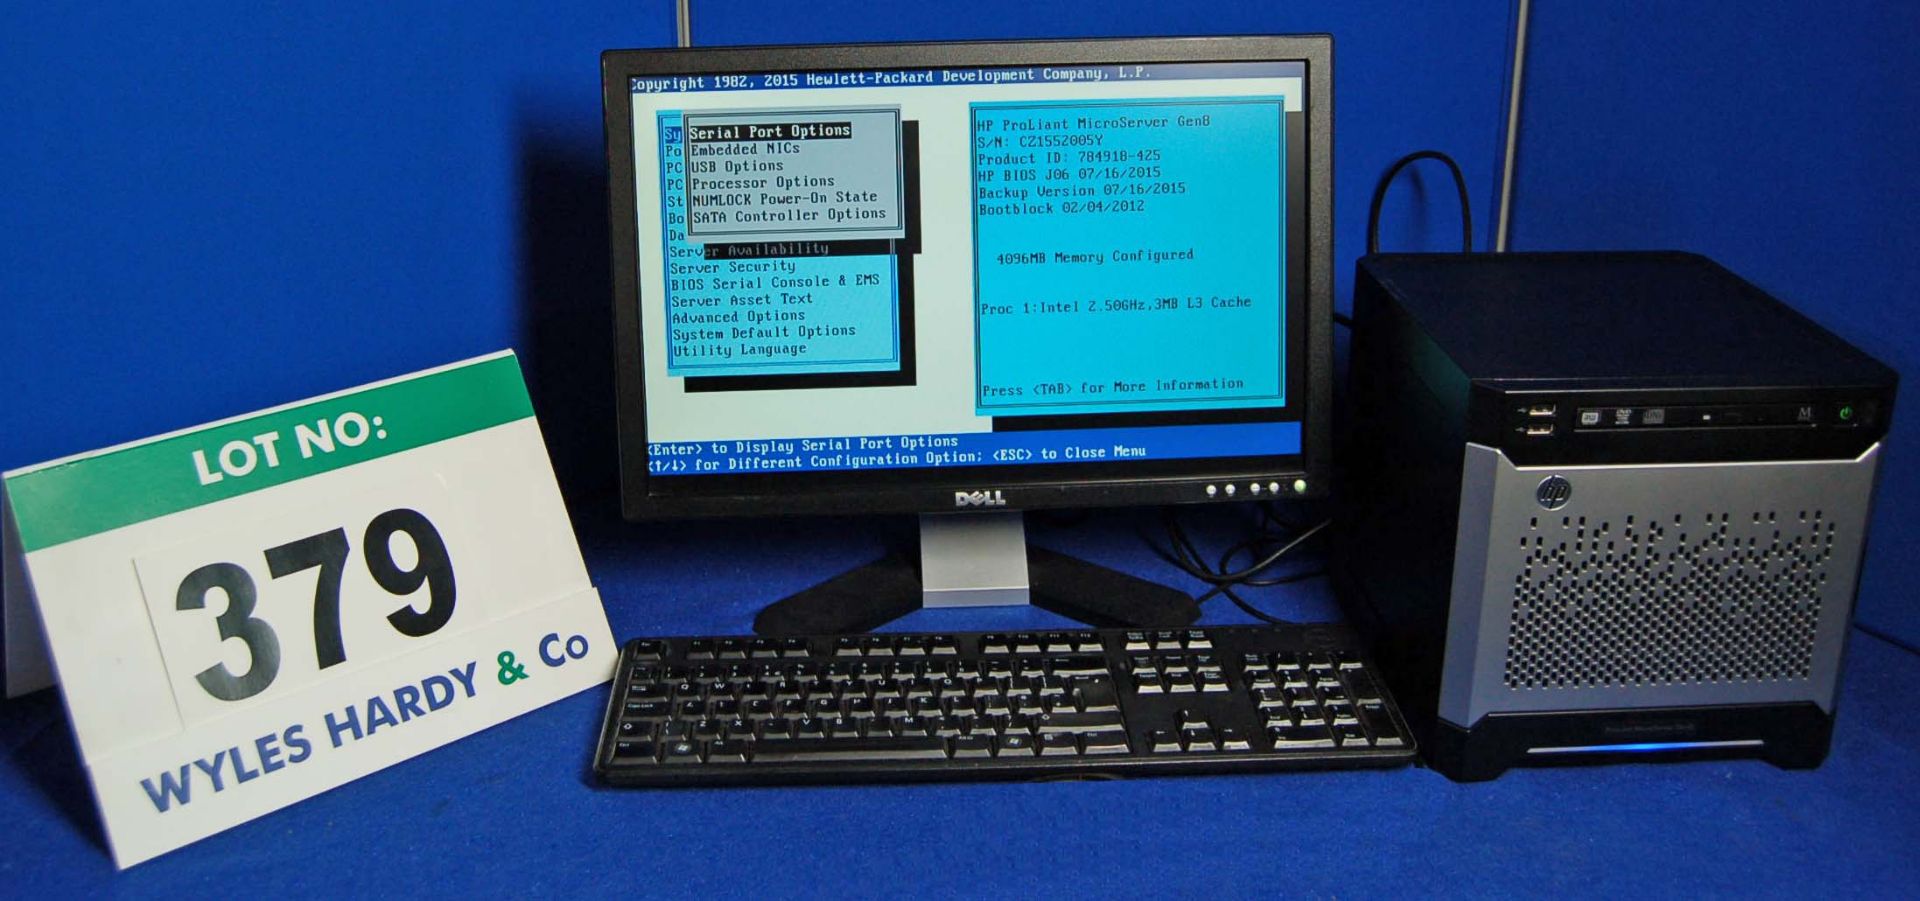 A HEWLETT PACKARD Proliant Gen 8 INTEL Pentium 2.5Ghz Dual Core Small Form Server Computer with